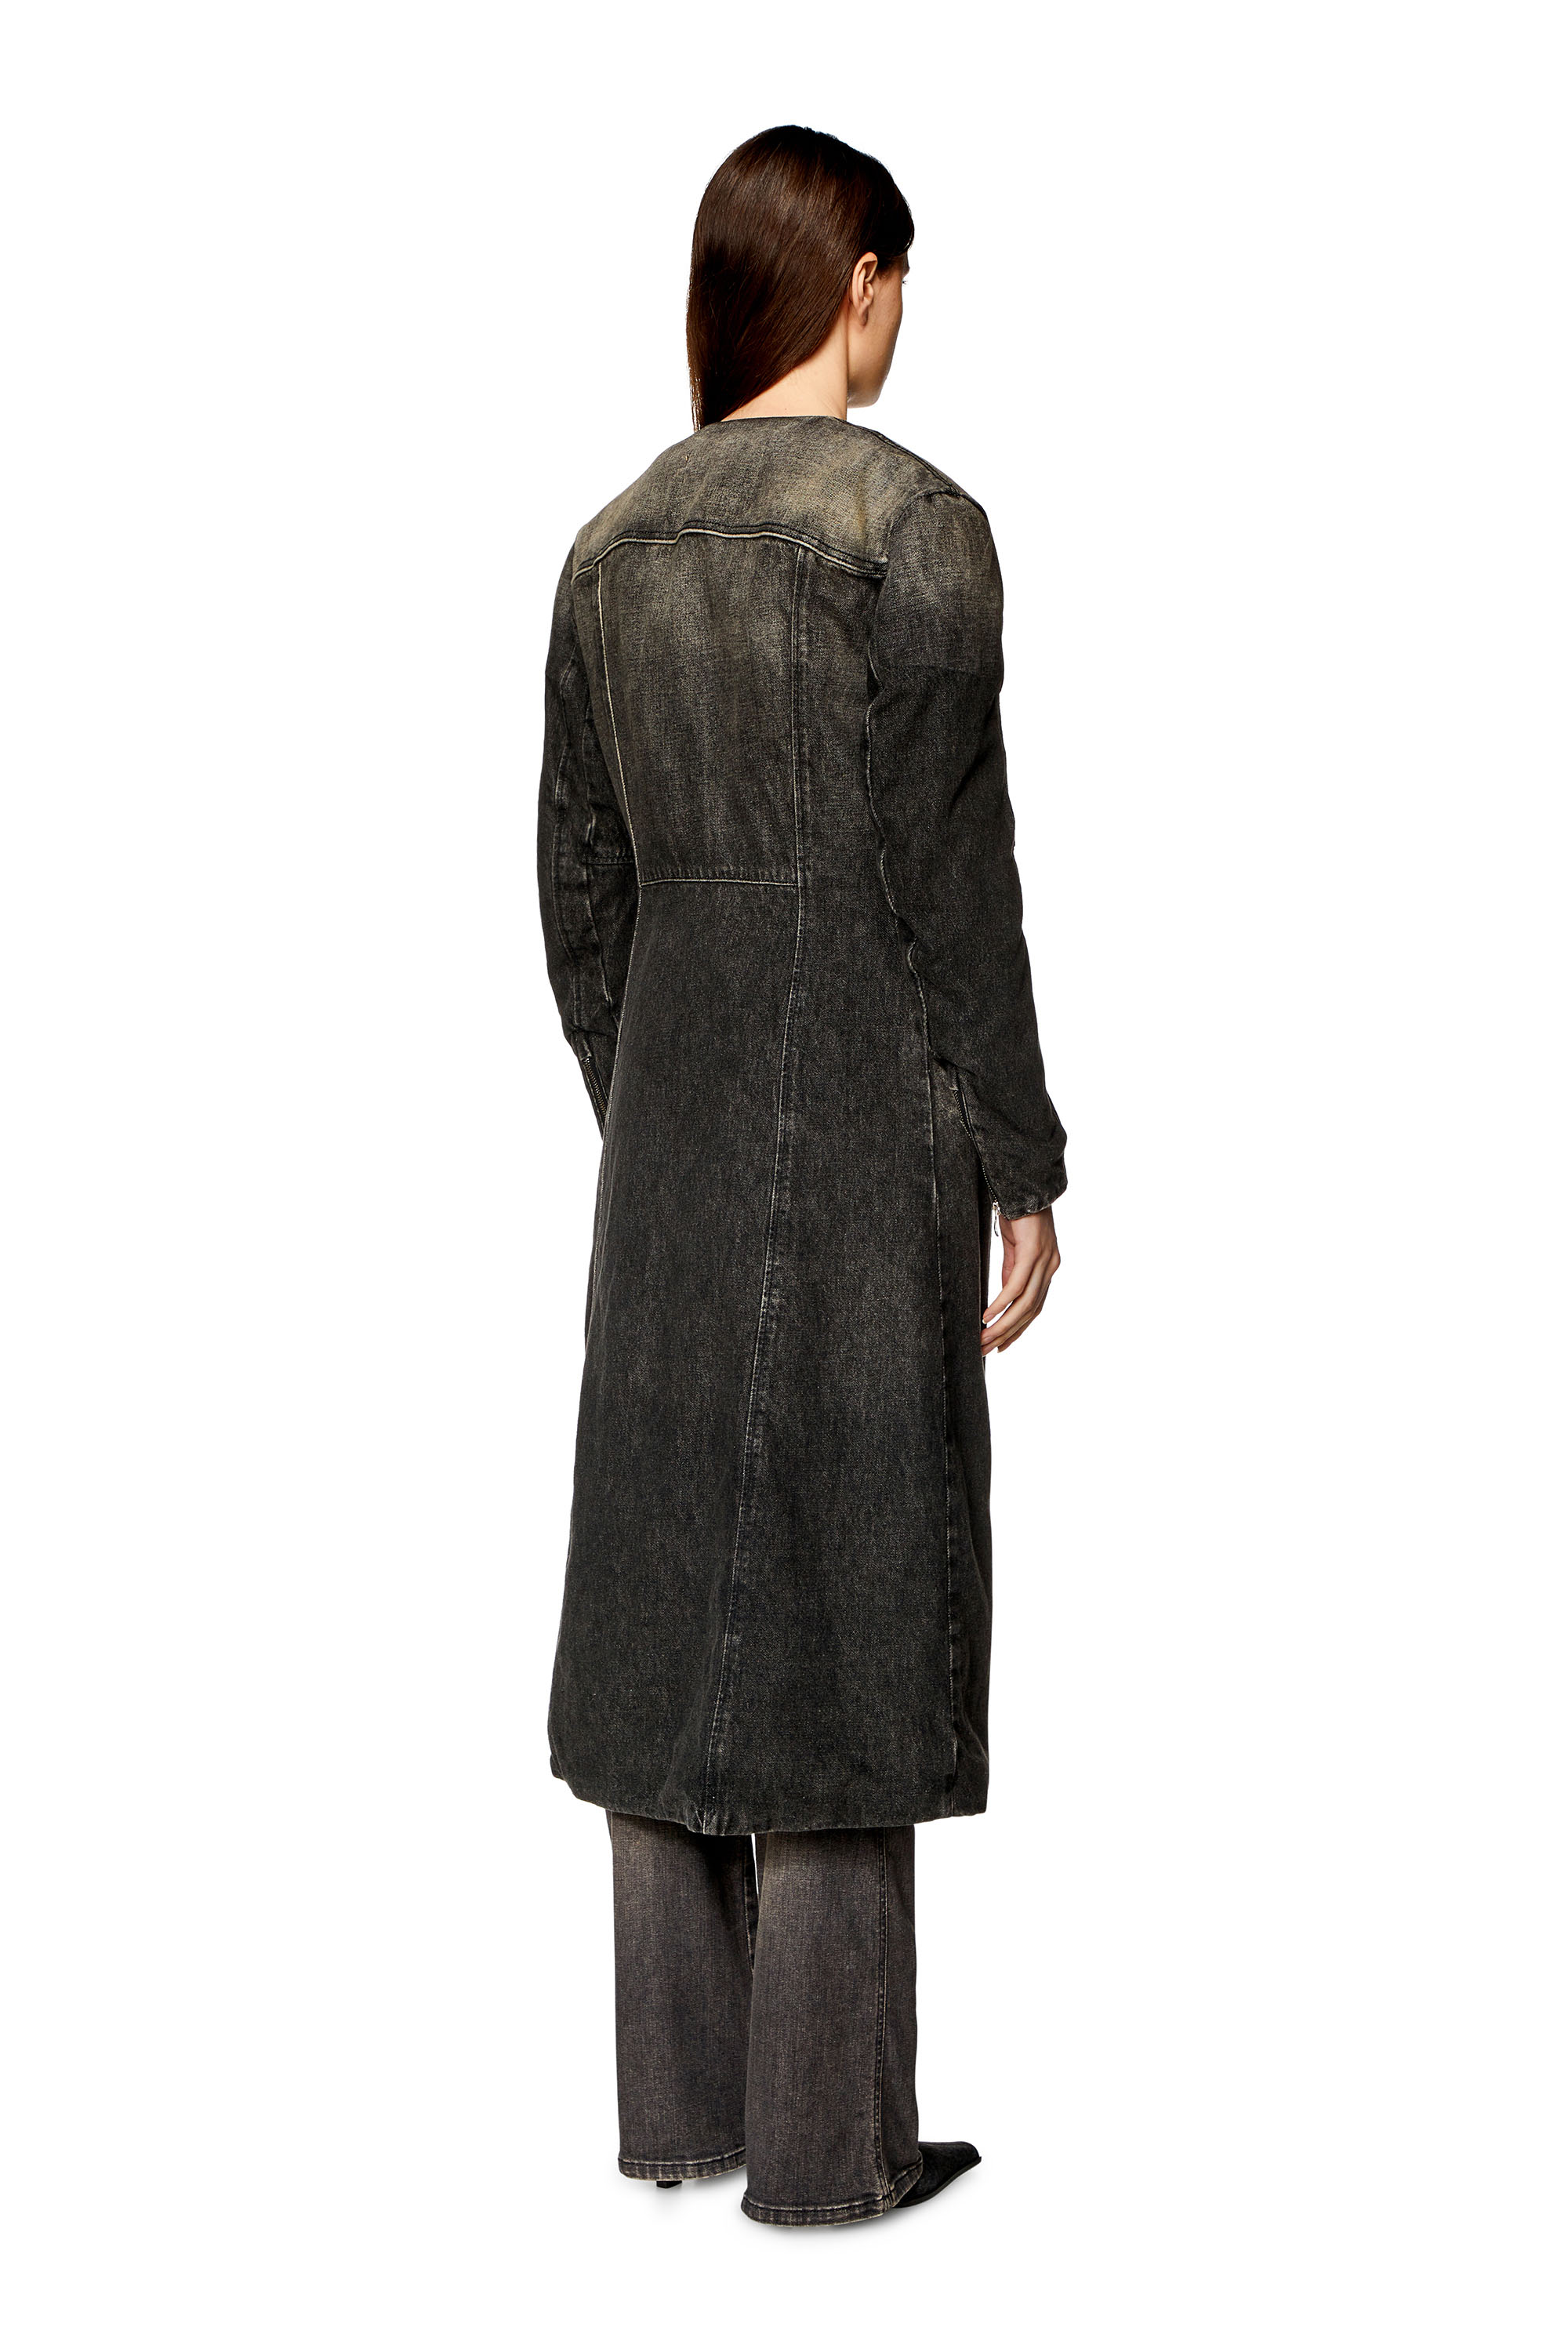 Diesel - DE-SY-S, Woman Denim coat in cotton and hemp in Black - Image 2